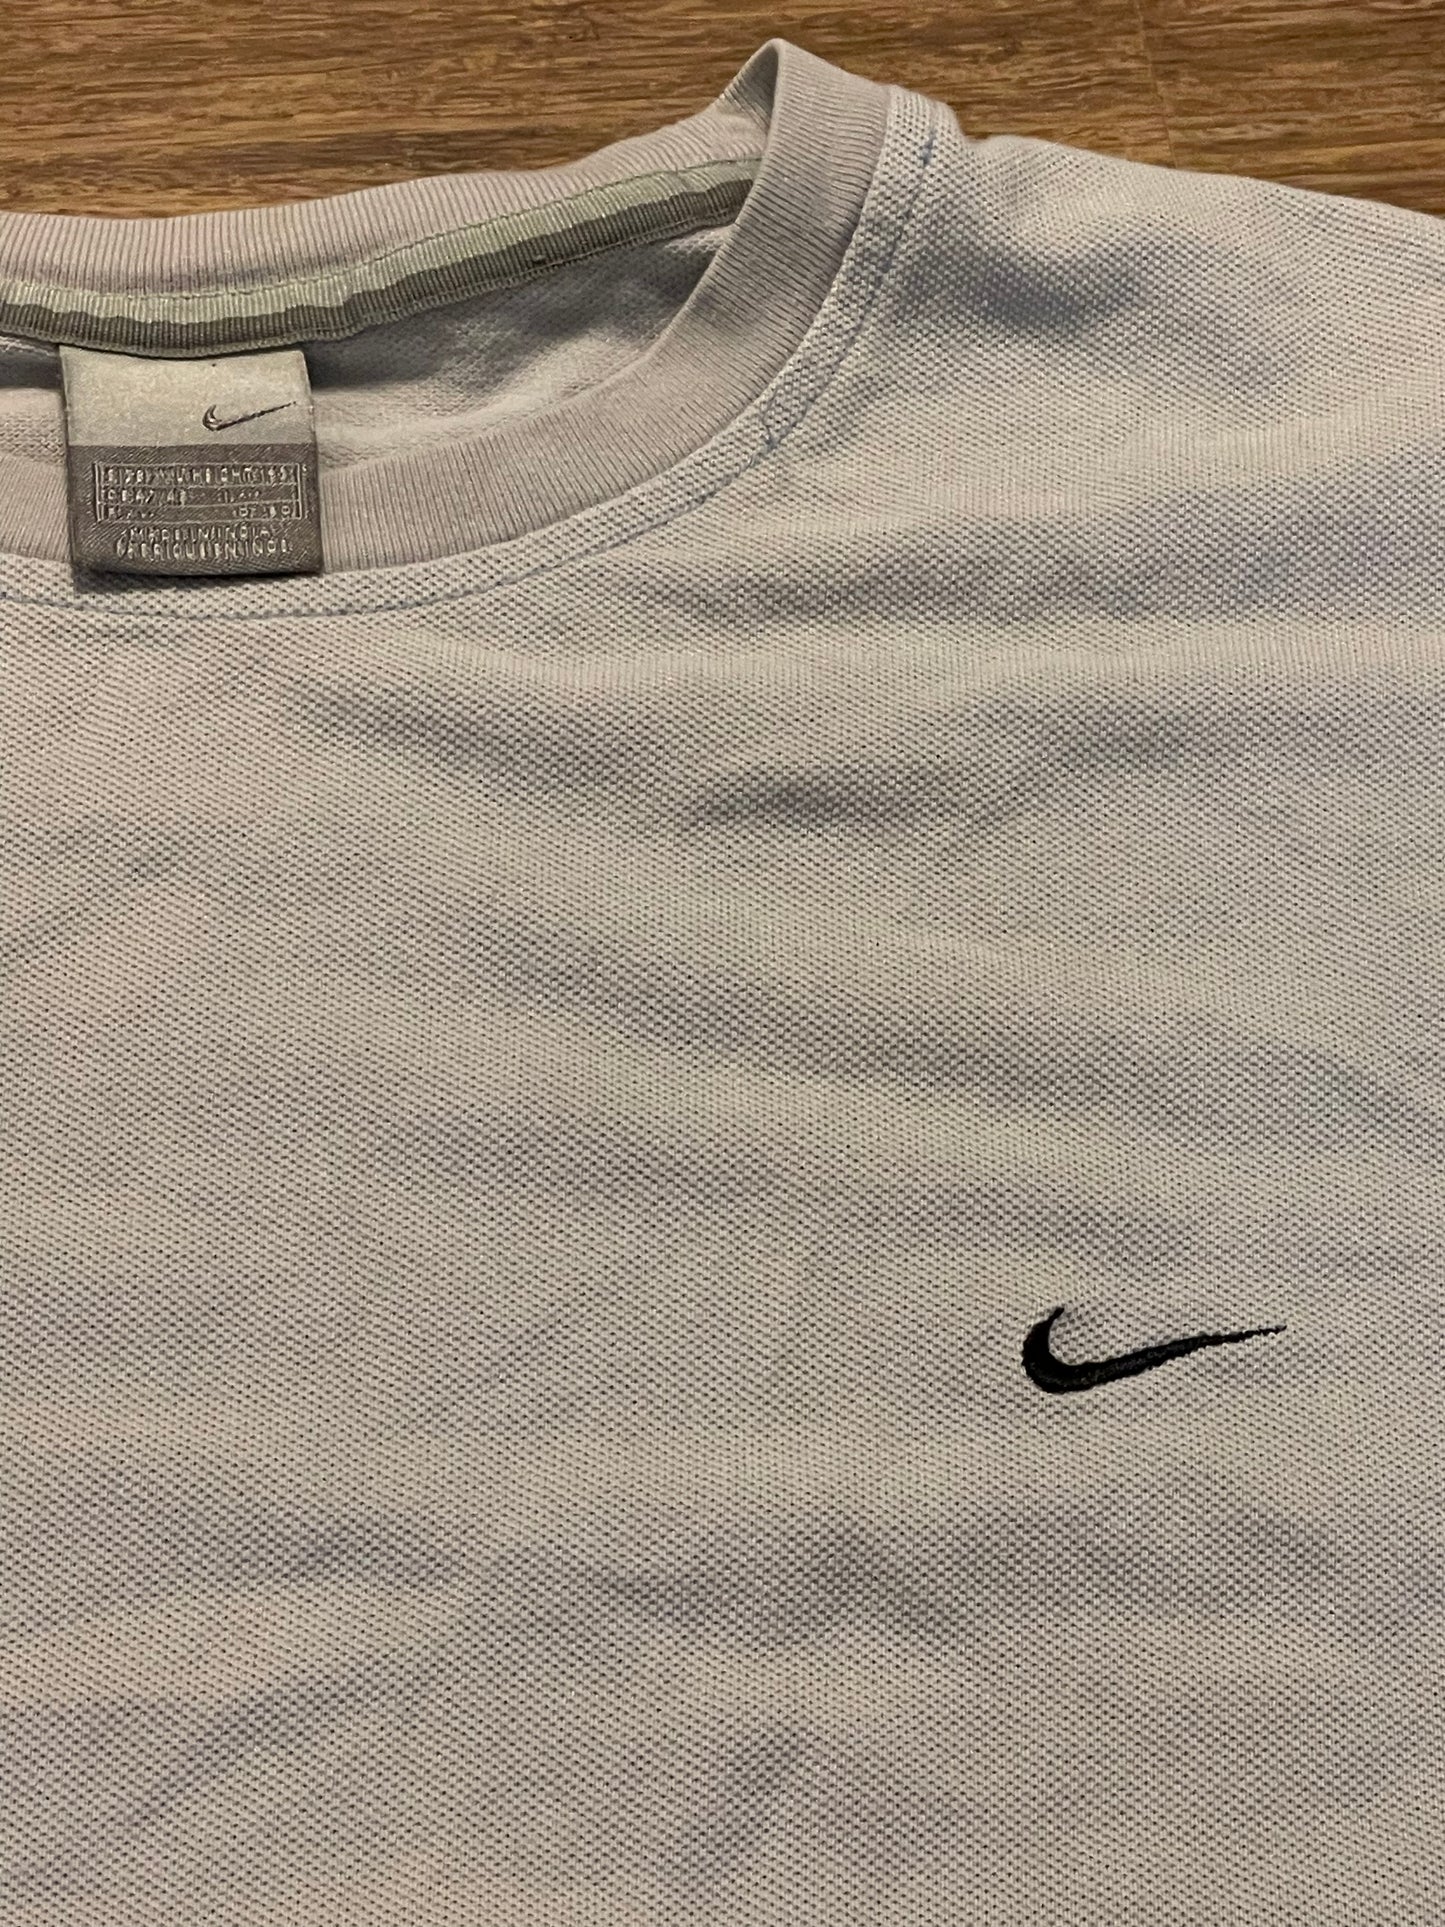 Nike T-Shirt (L-XL)